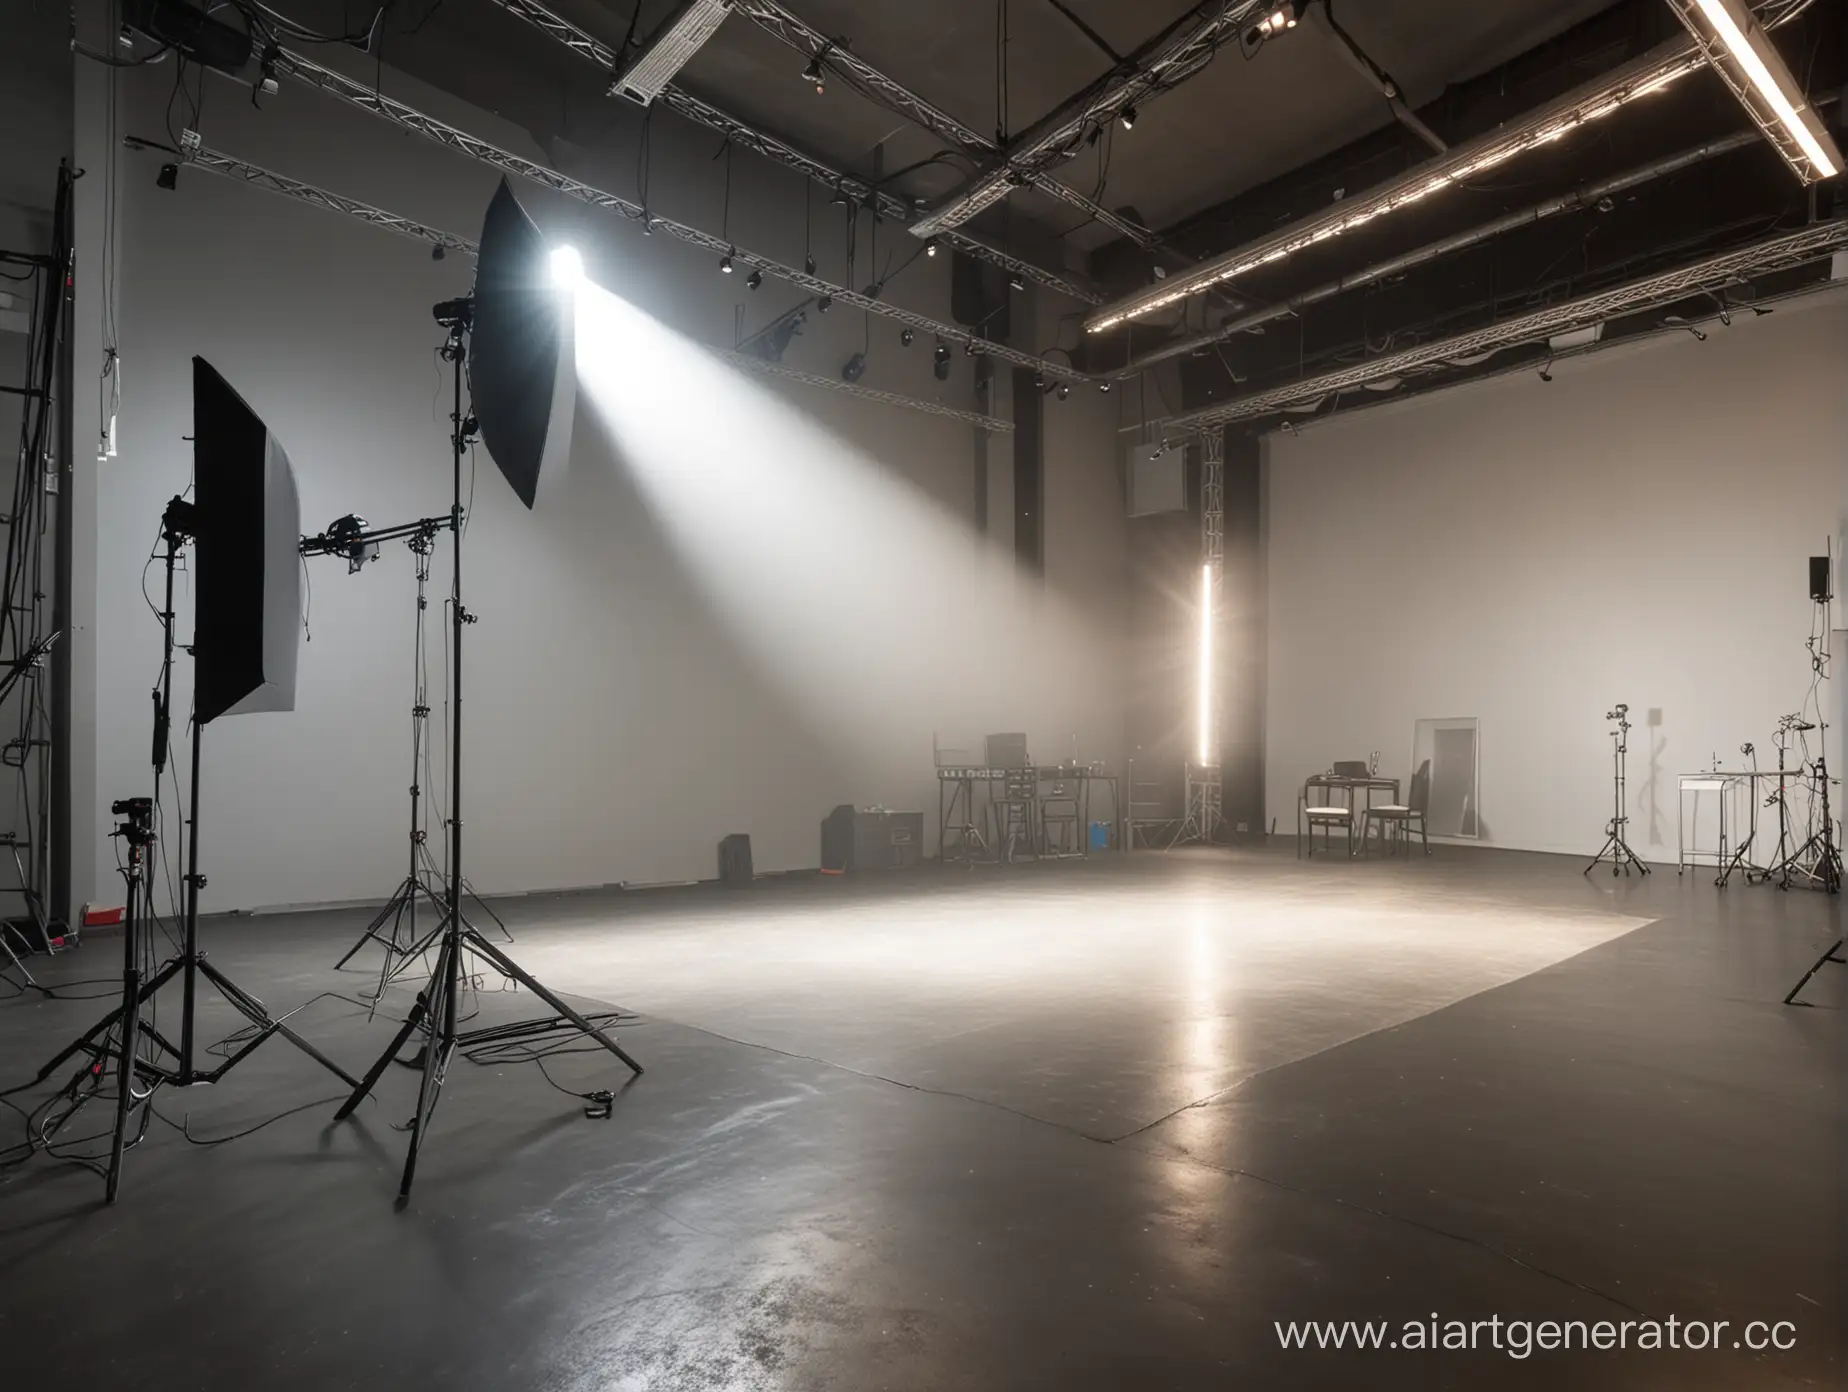 Professional-Photography-Studio-with-Abundant-Lighting-Equipment